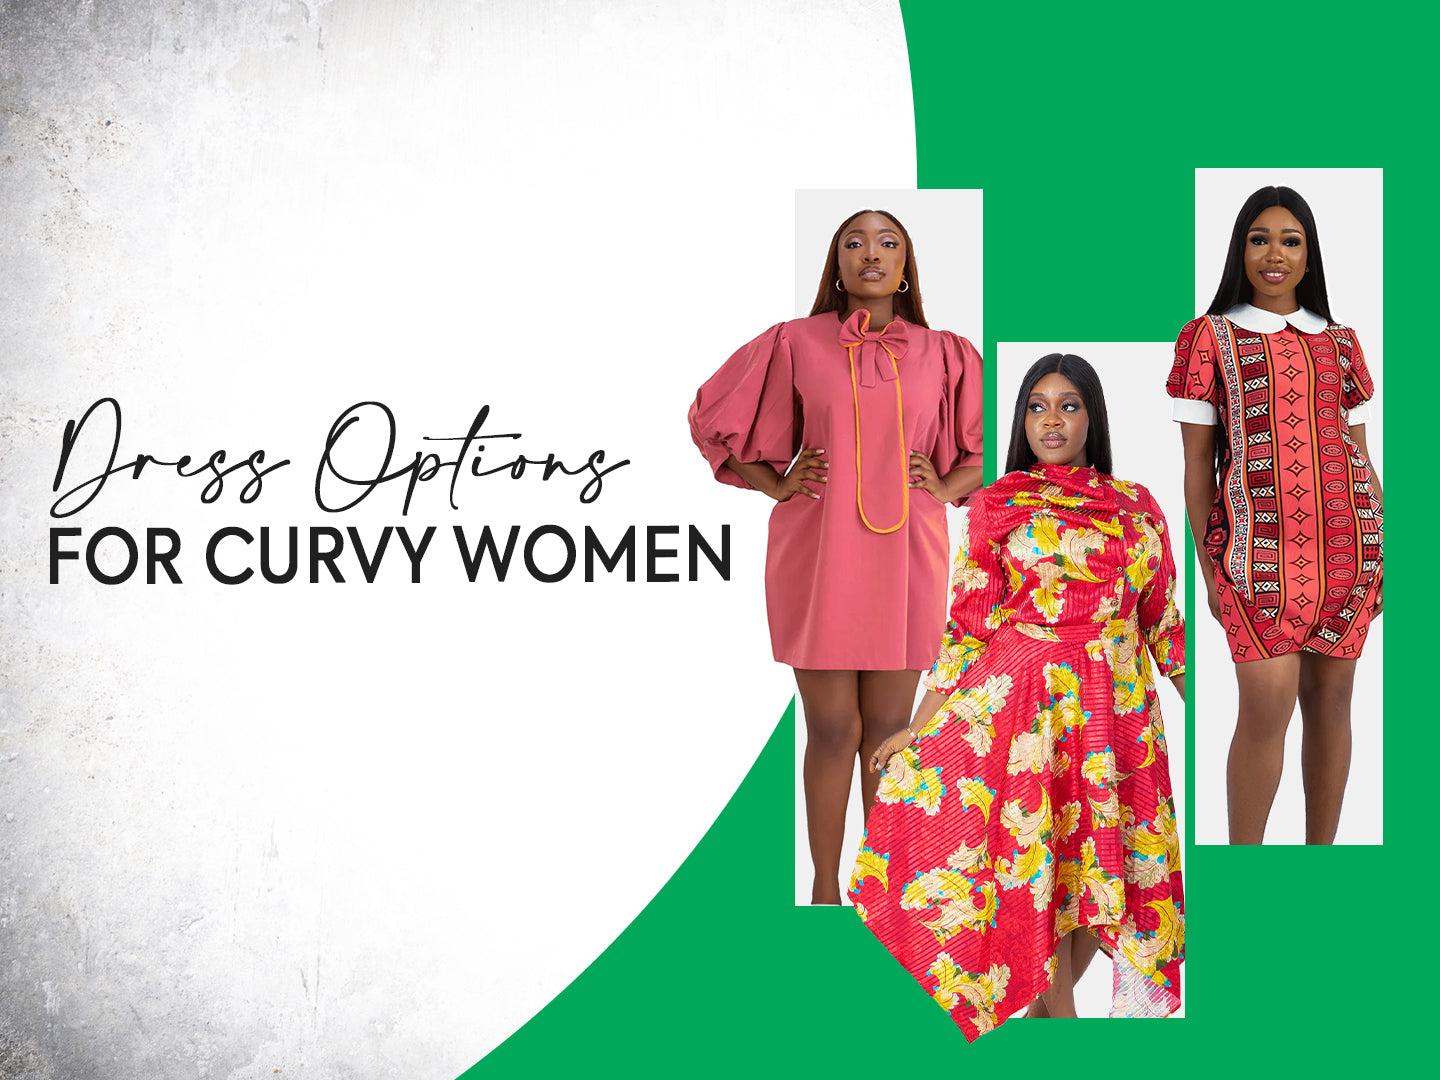 Dress Options for Curvy Women